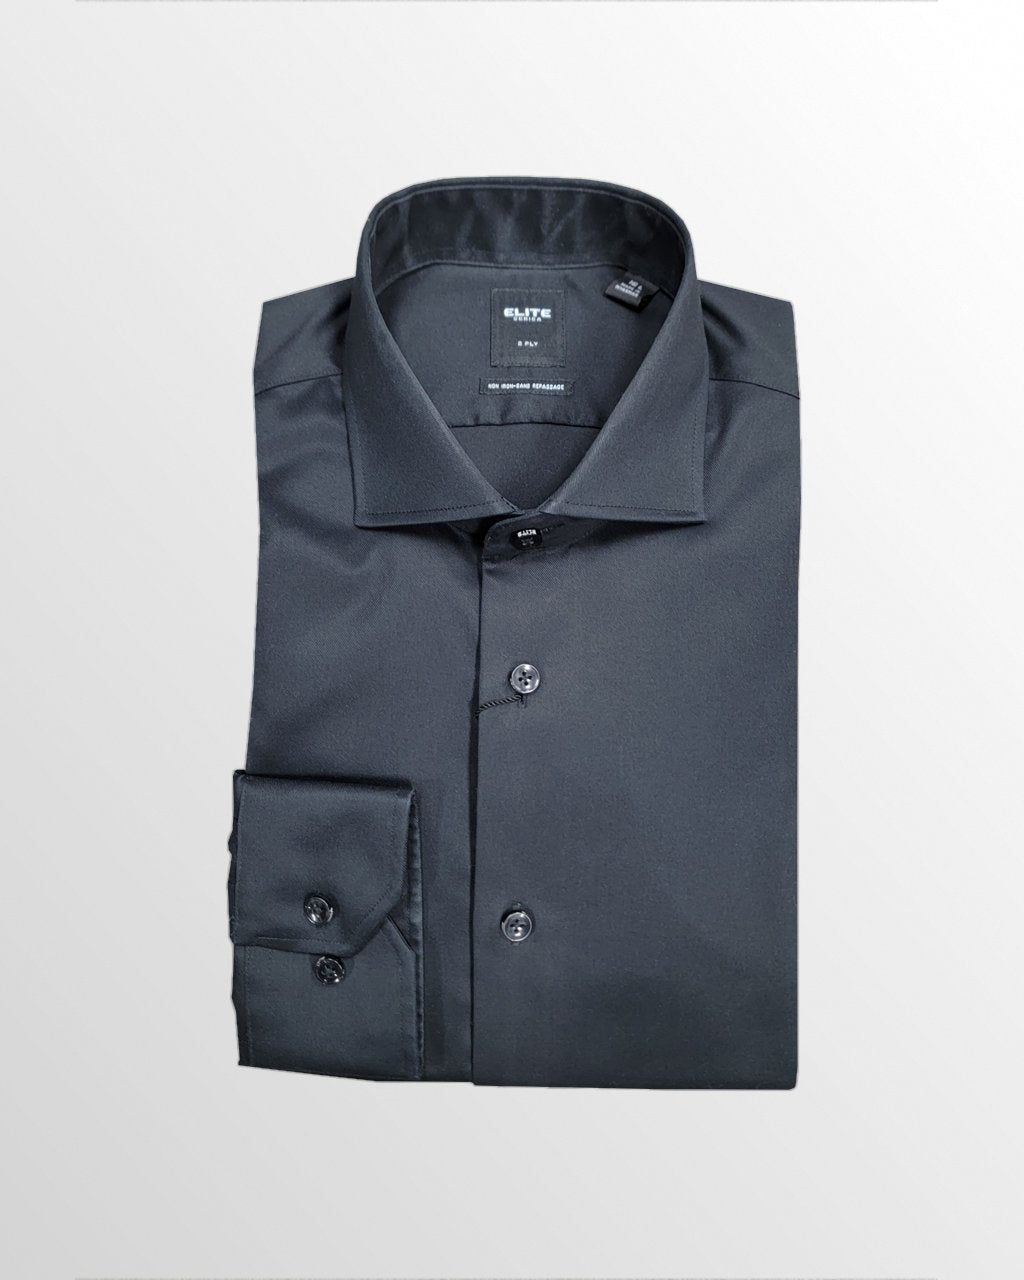 Serica Elite Twill Dress Shirt – Black